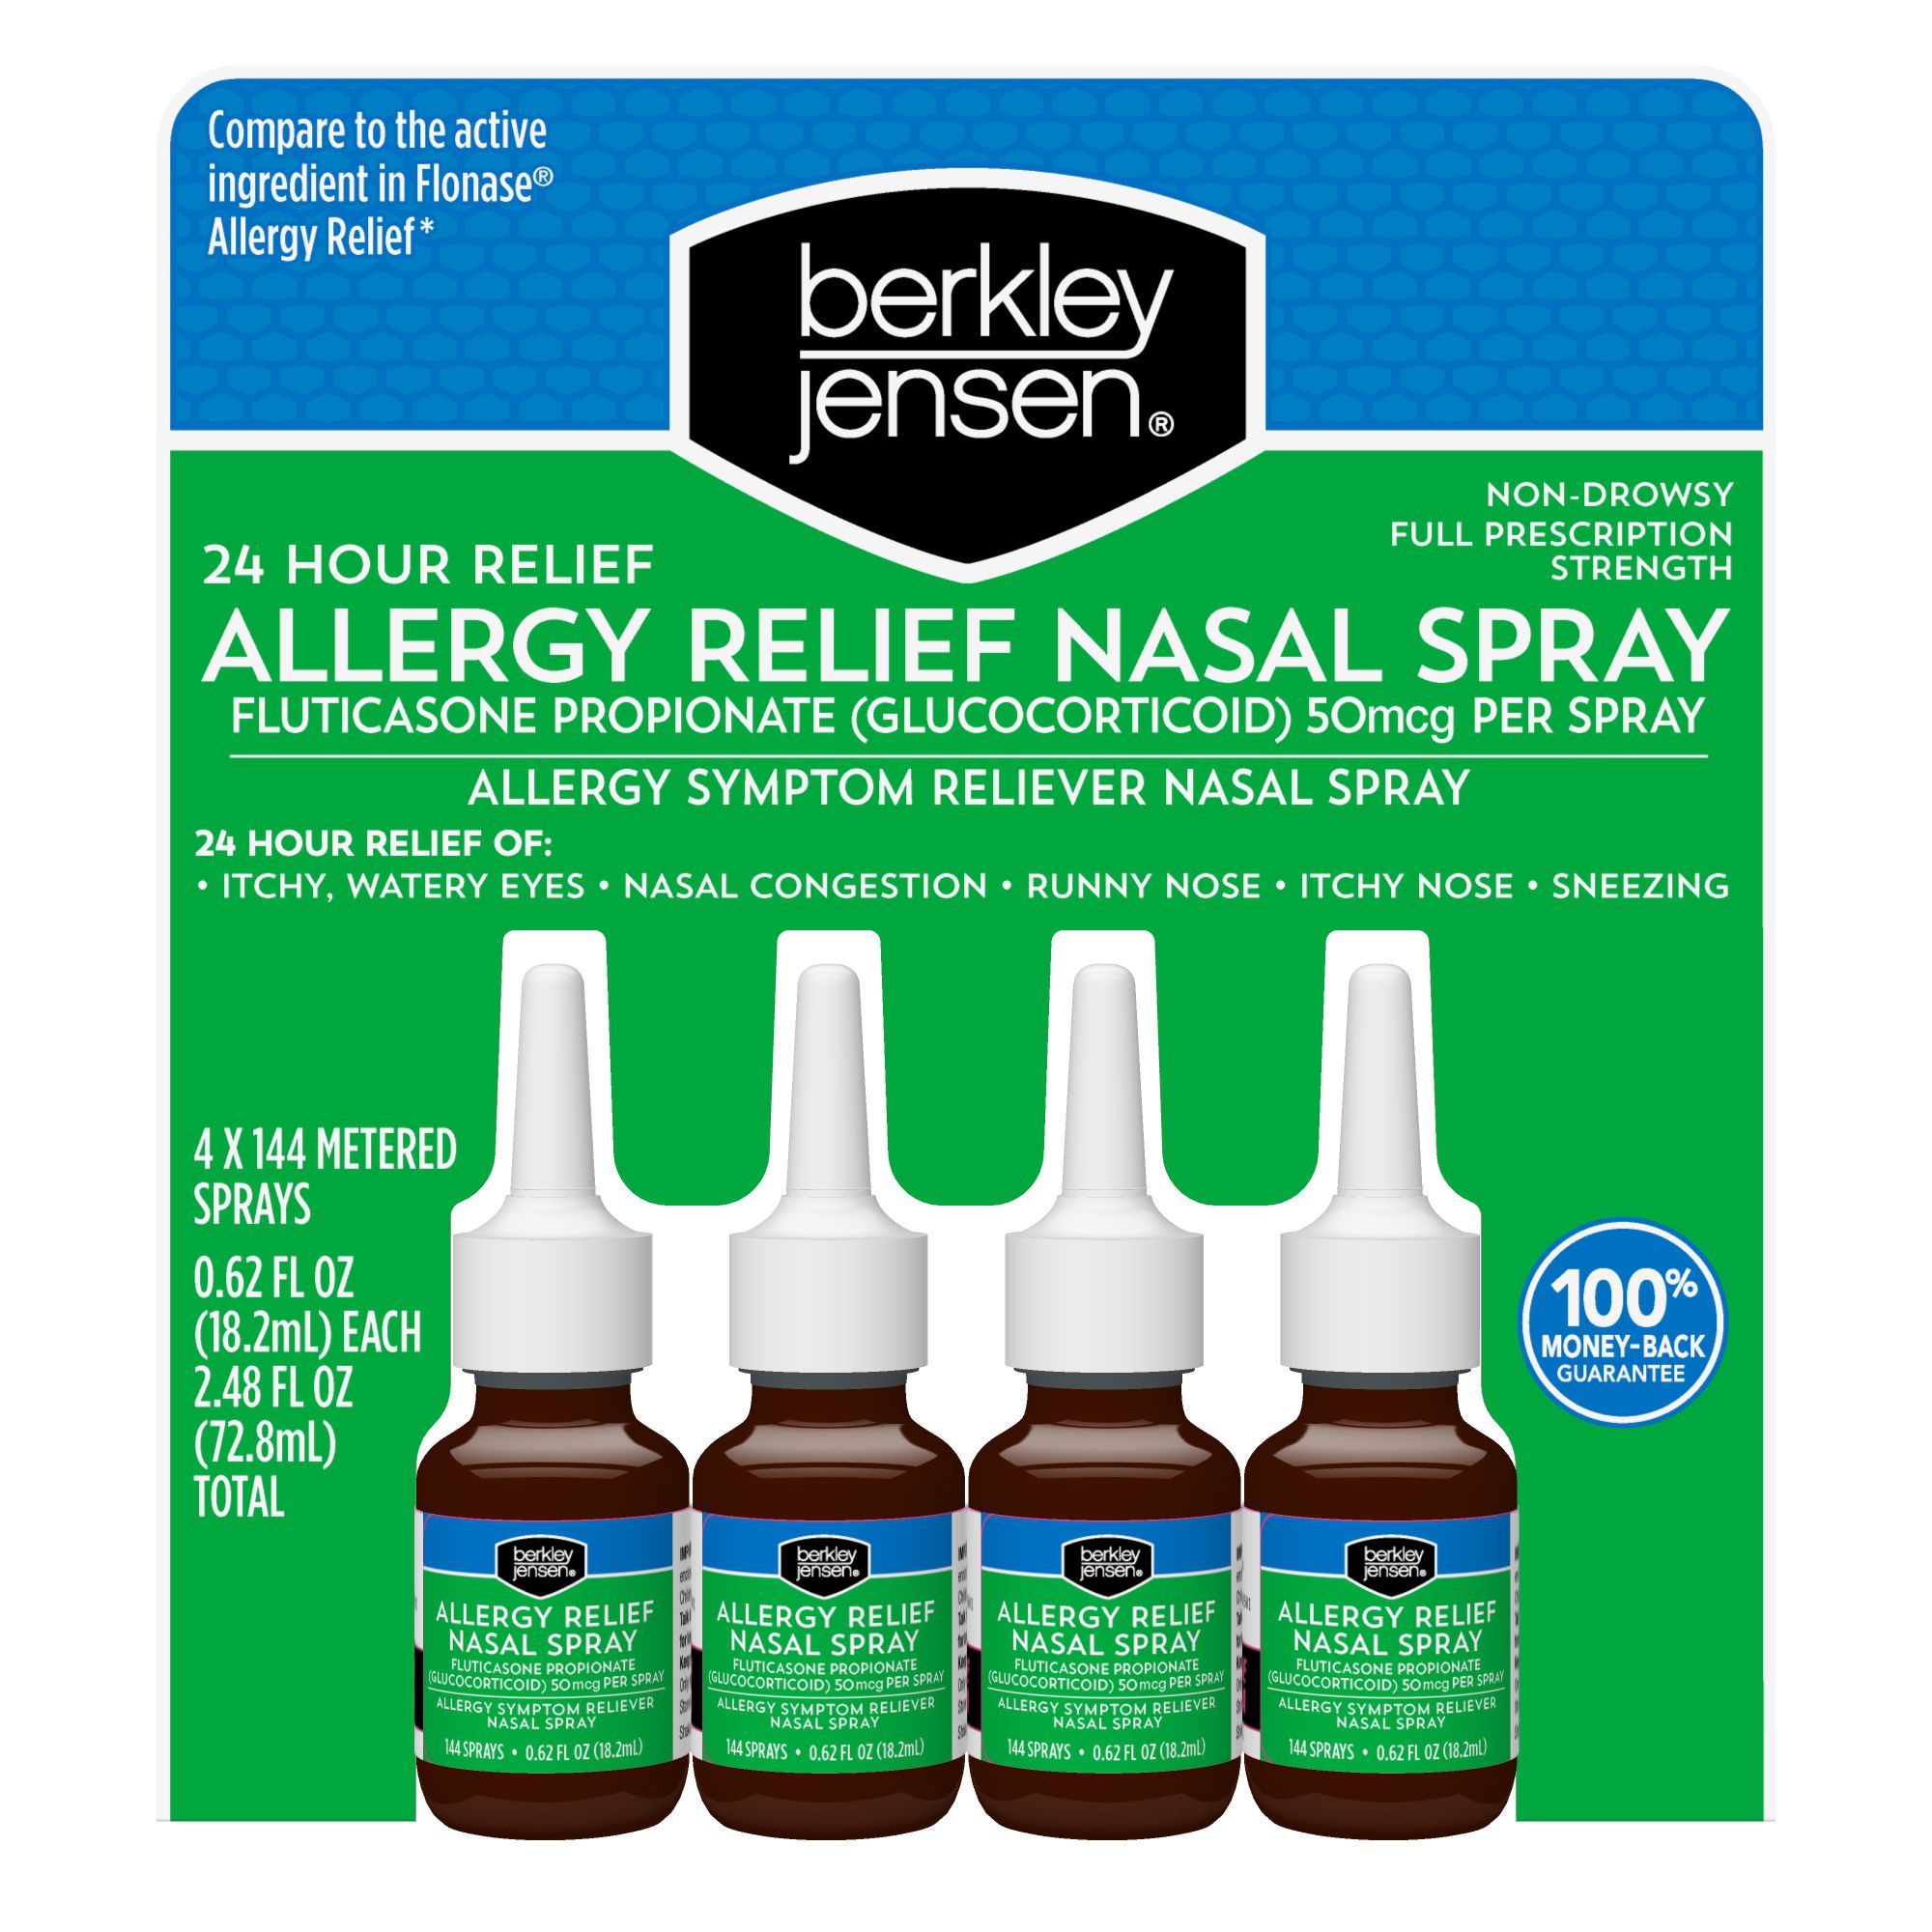 Xclear Kids Nasal Sinus Spray, Allergy & Sinus